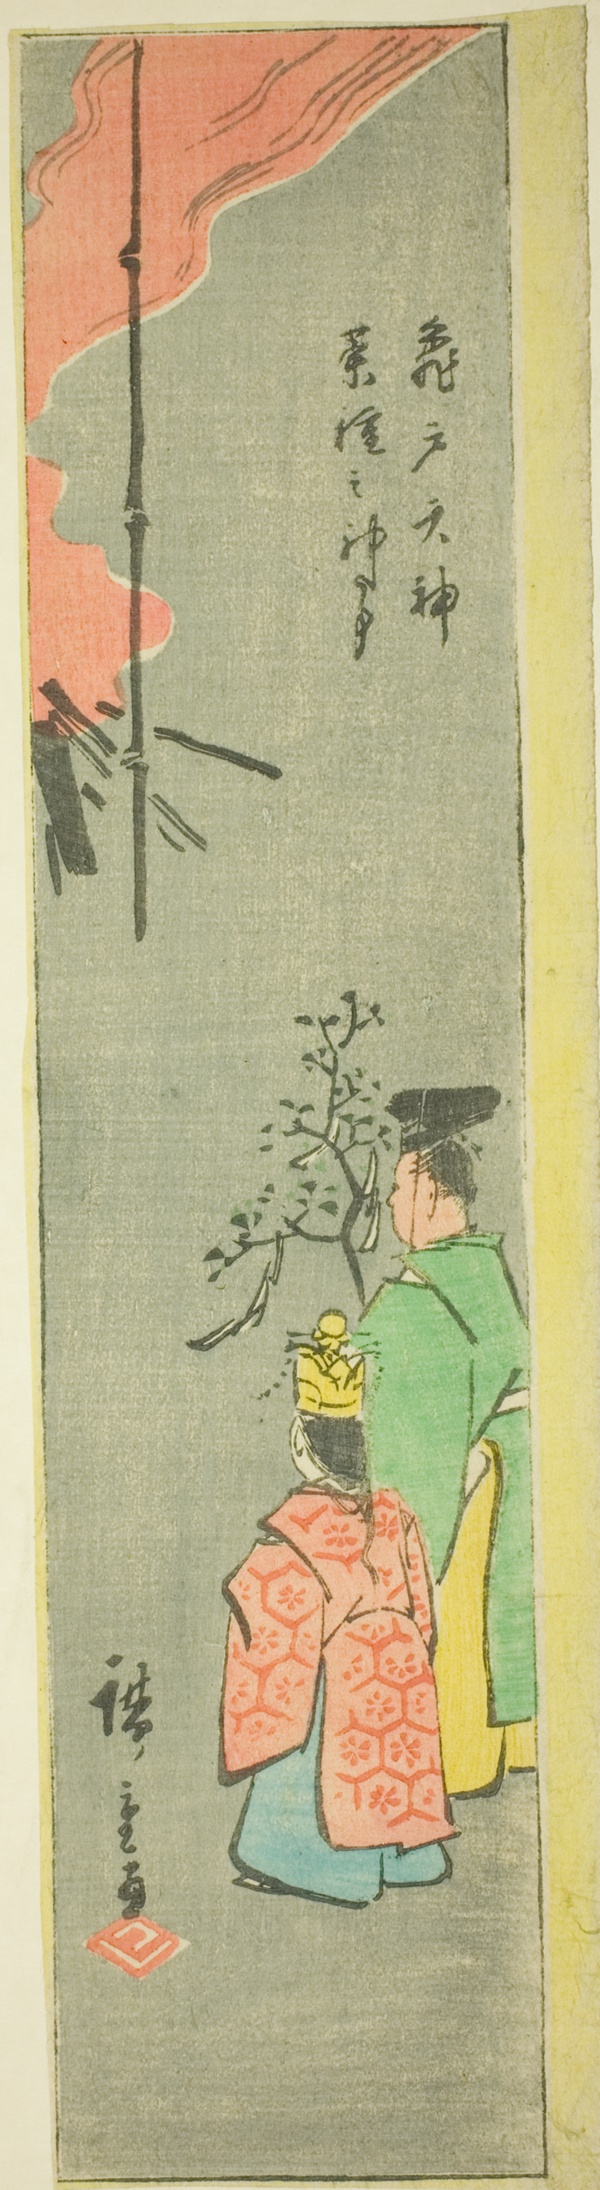 Offering Colza at the Kameido Tenjin Shrine (Kameido Tenjin natane no jinji), section of a sheet from the series 